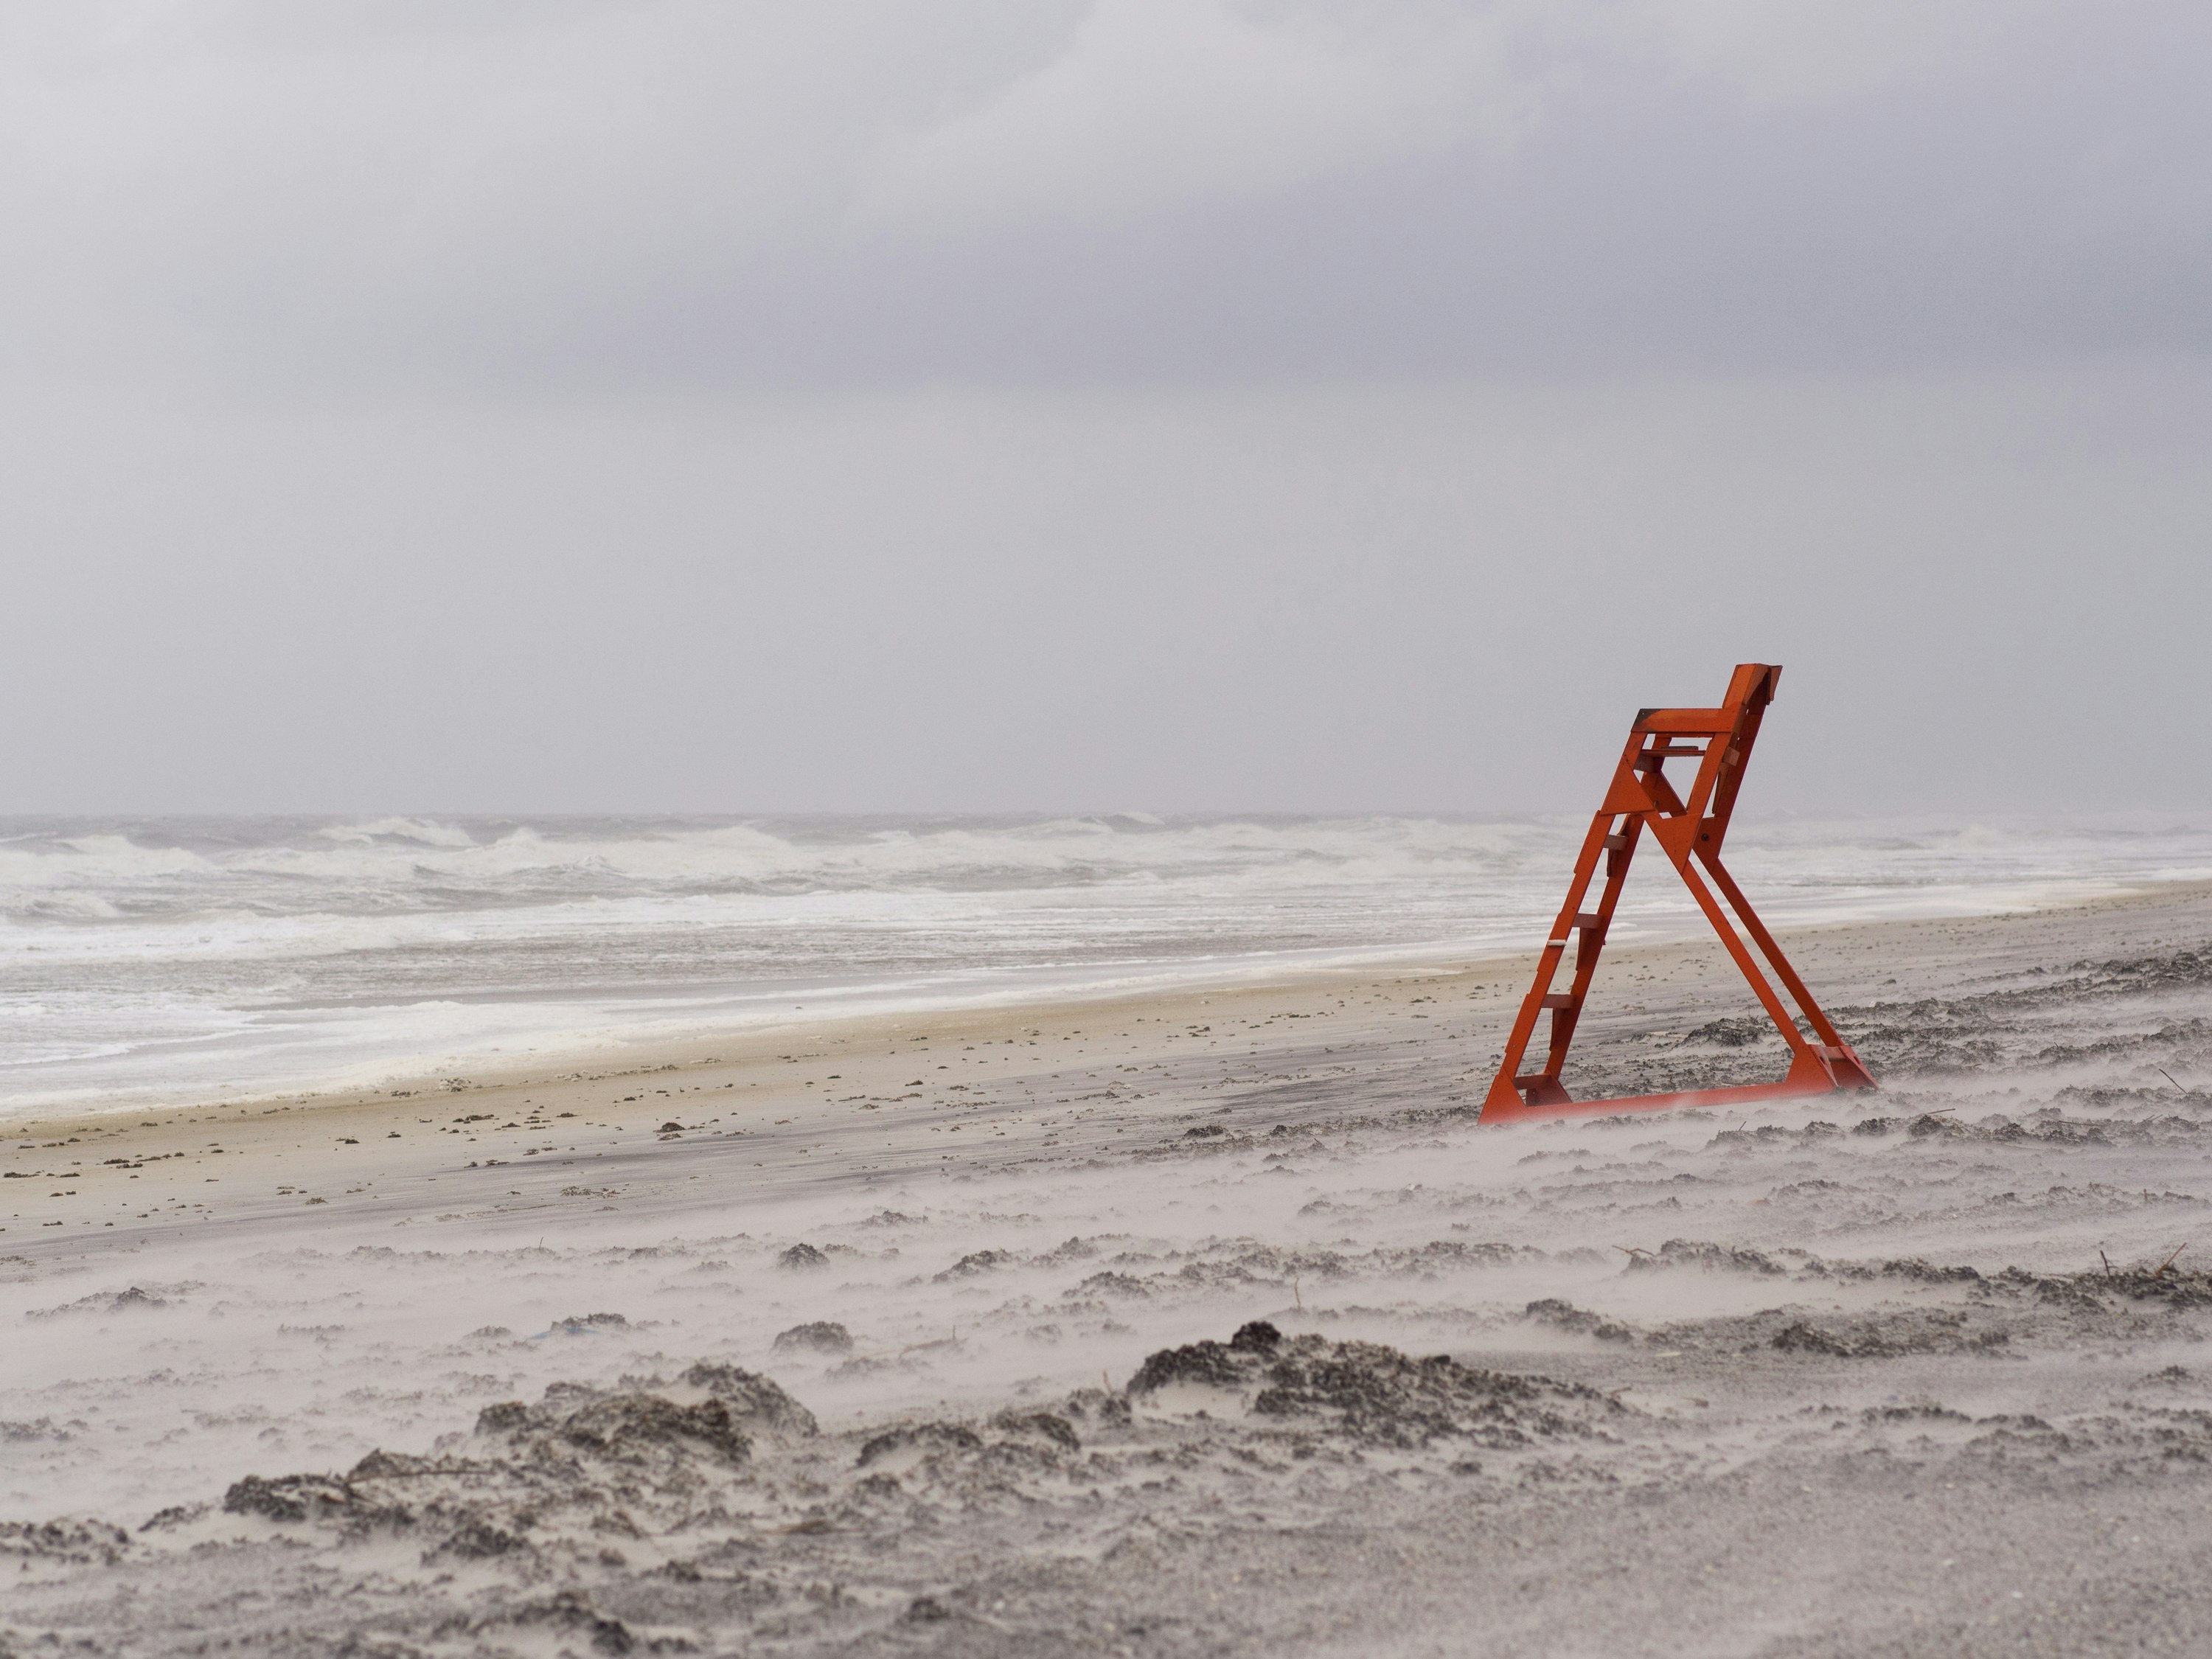 red metal ladder stand near seashore during daytime